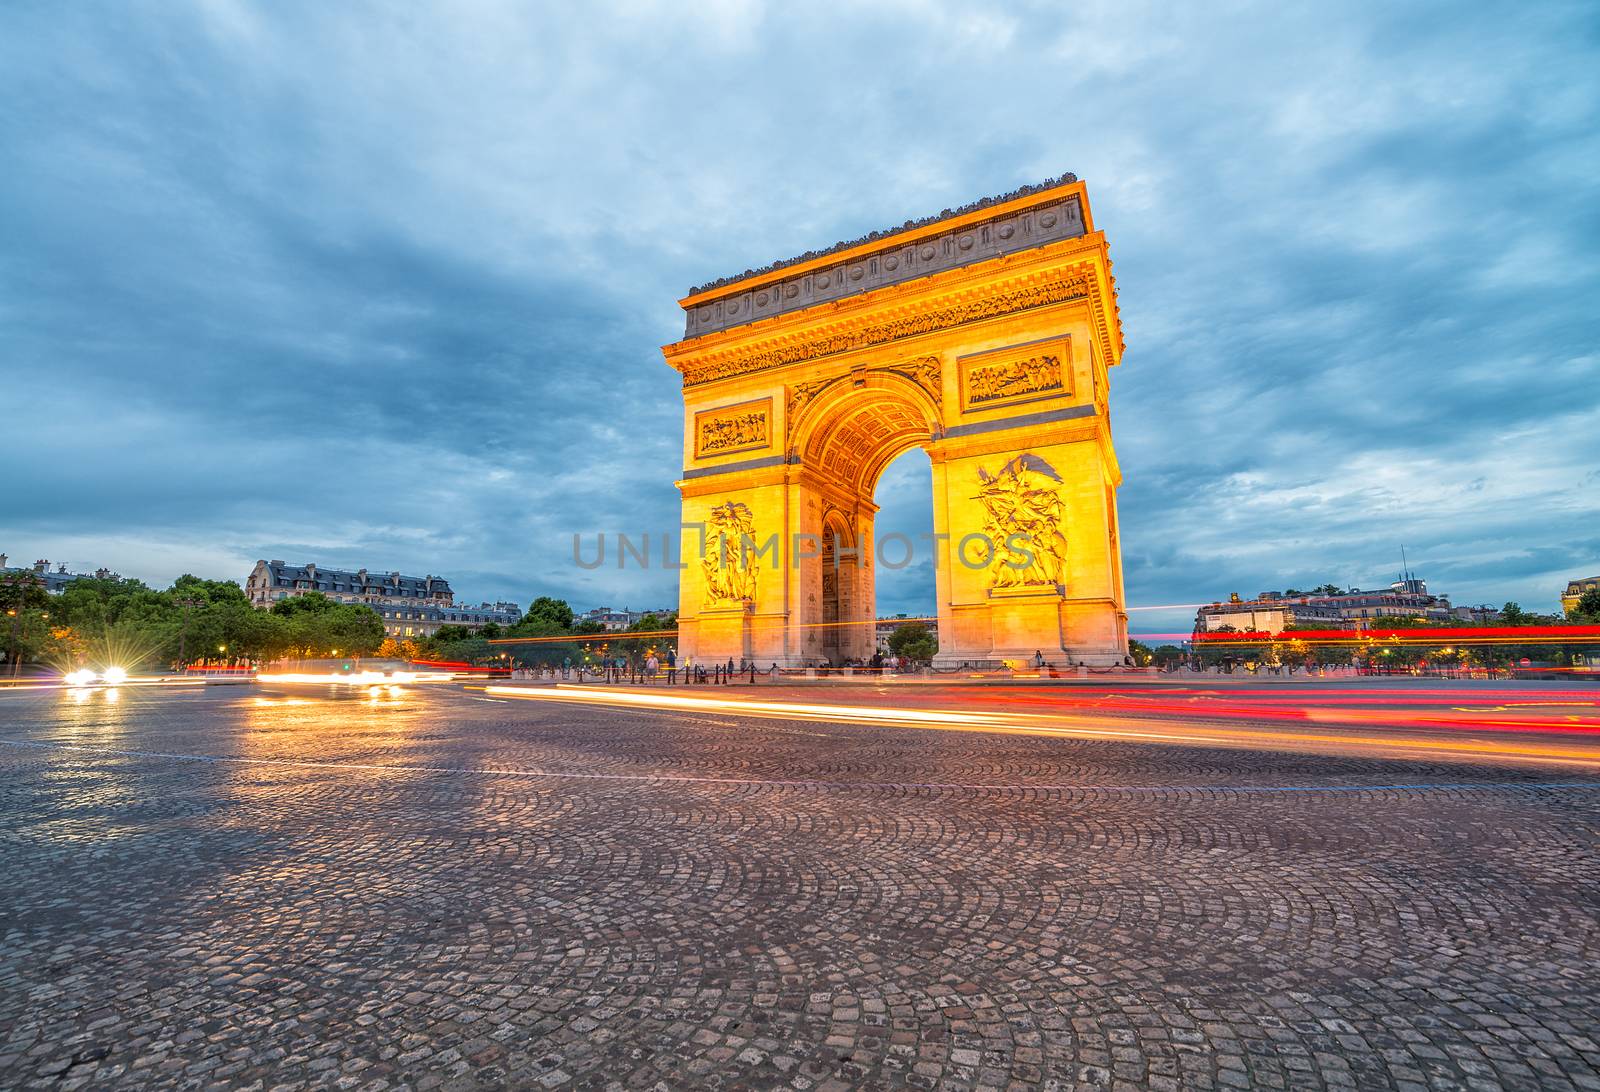 Triumph Arc with city traffic at night, Paris.